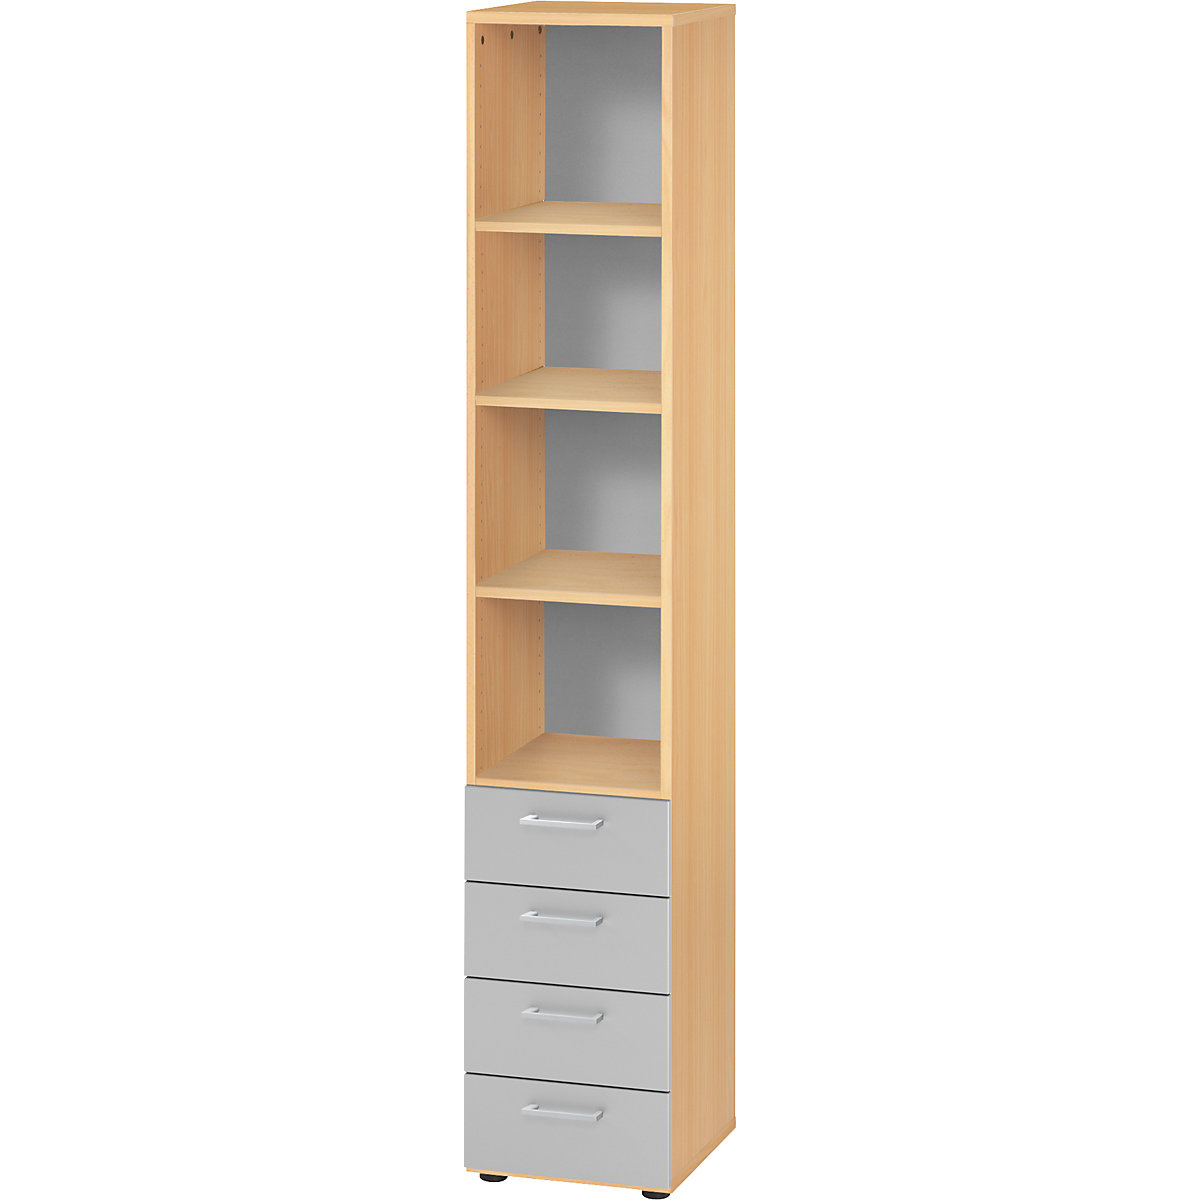 Shelf unit RENATUS – eurokraft pro, 3 shelves / 4 drawers, silver coloured, beech finish-9